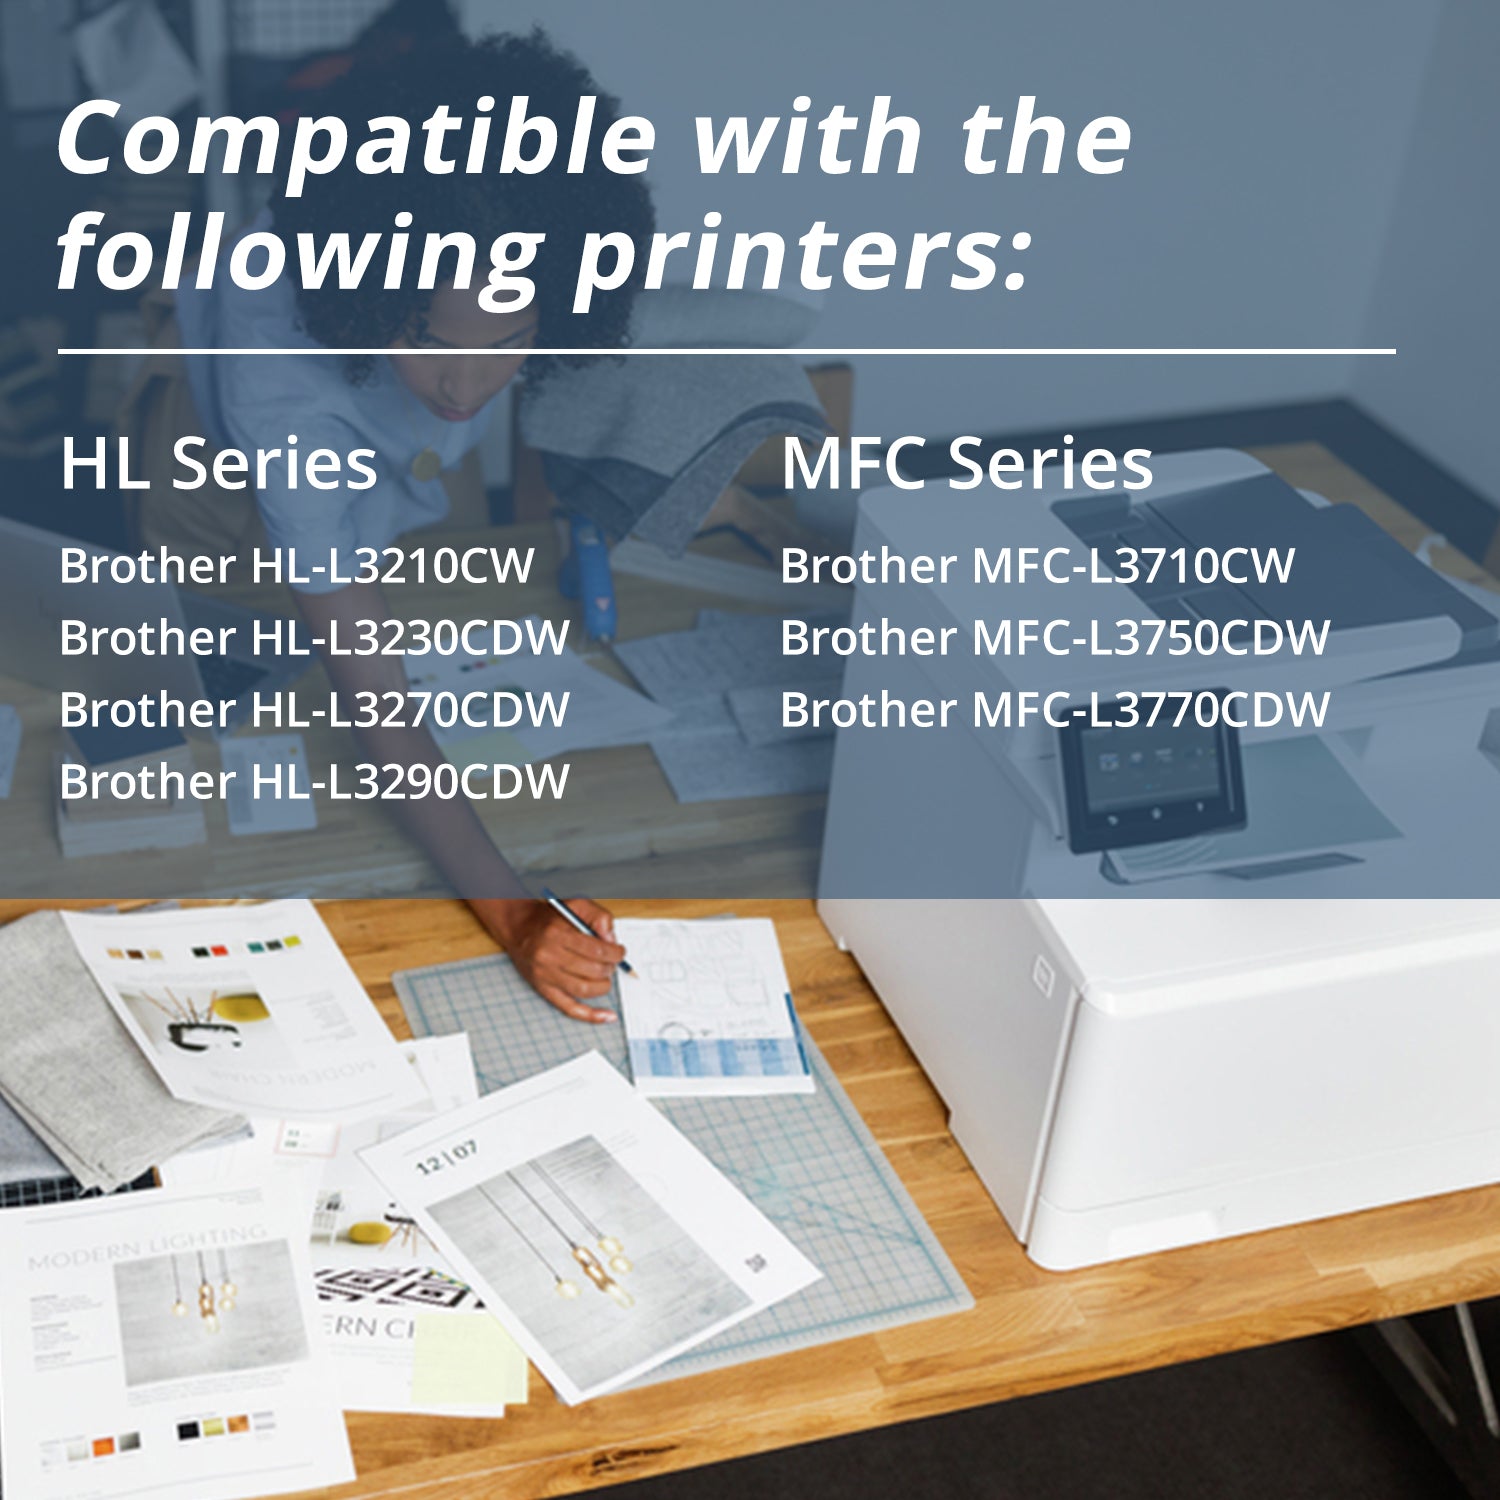 TN223 TN227 Toner with Chip for Brother HL-L3210cw L3750cdw L3770cdw  printer